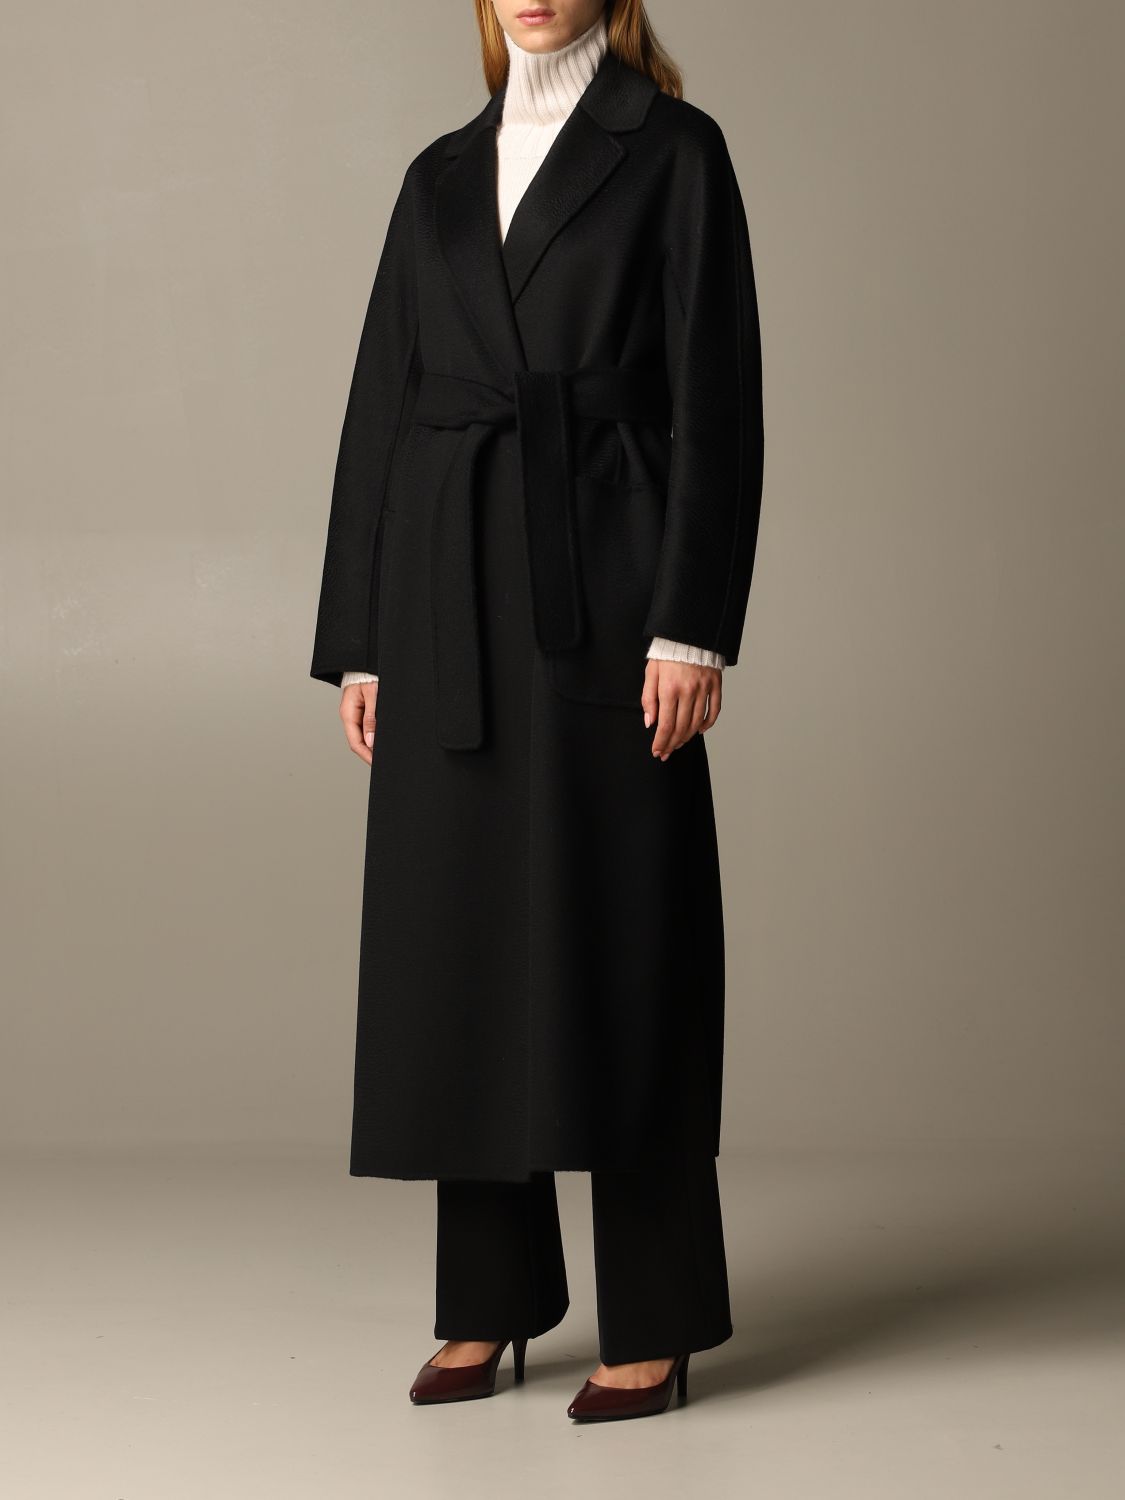 S MAX MARA: Amore coat in virgin wool and cashmere - Black | Coat S Max ...